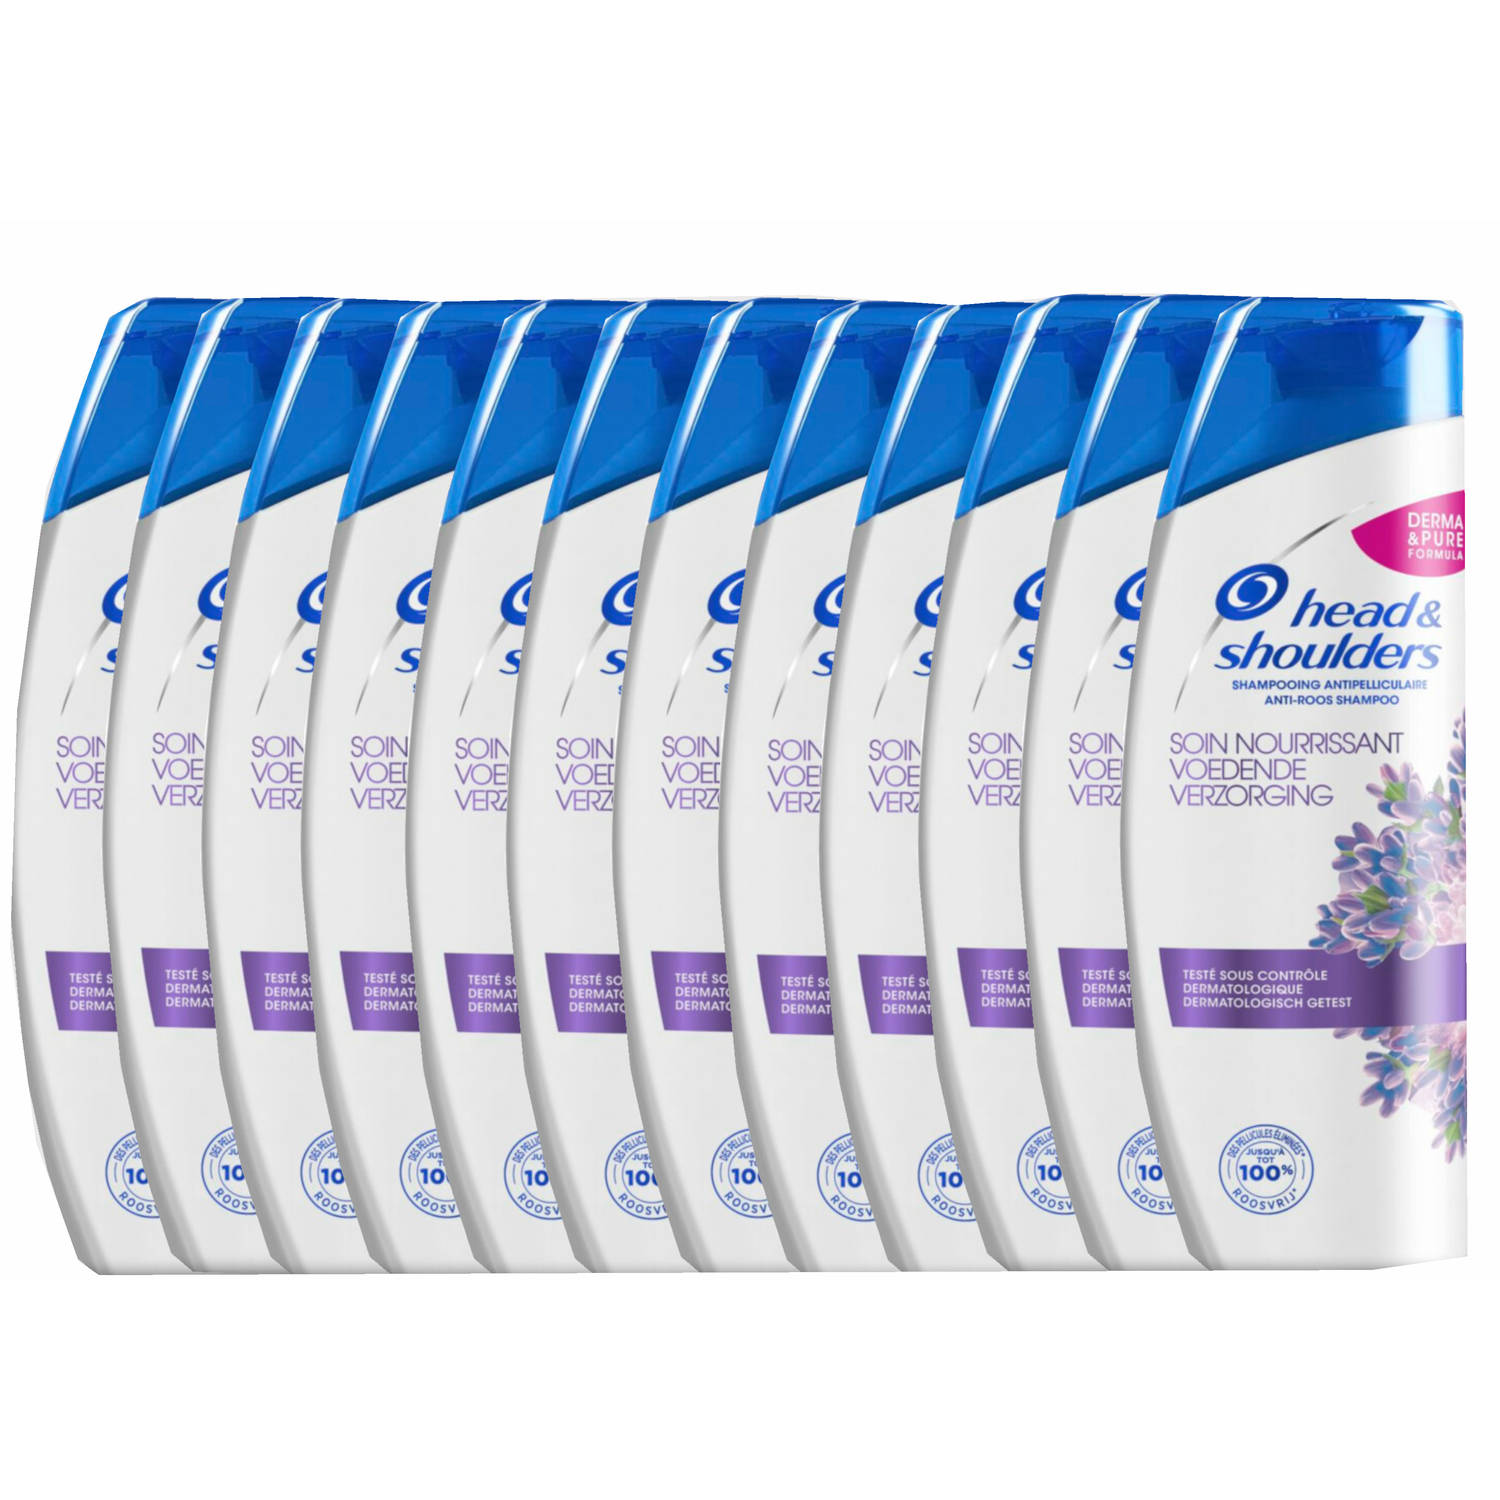 Head & Shoulders Voedende Verzorging Anti-Roos Shampoo - Voordeelverpakking - 12 x 280 ml